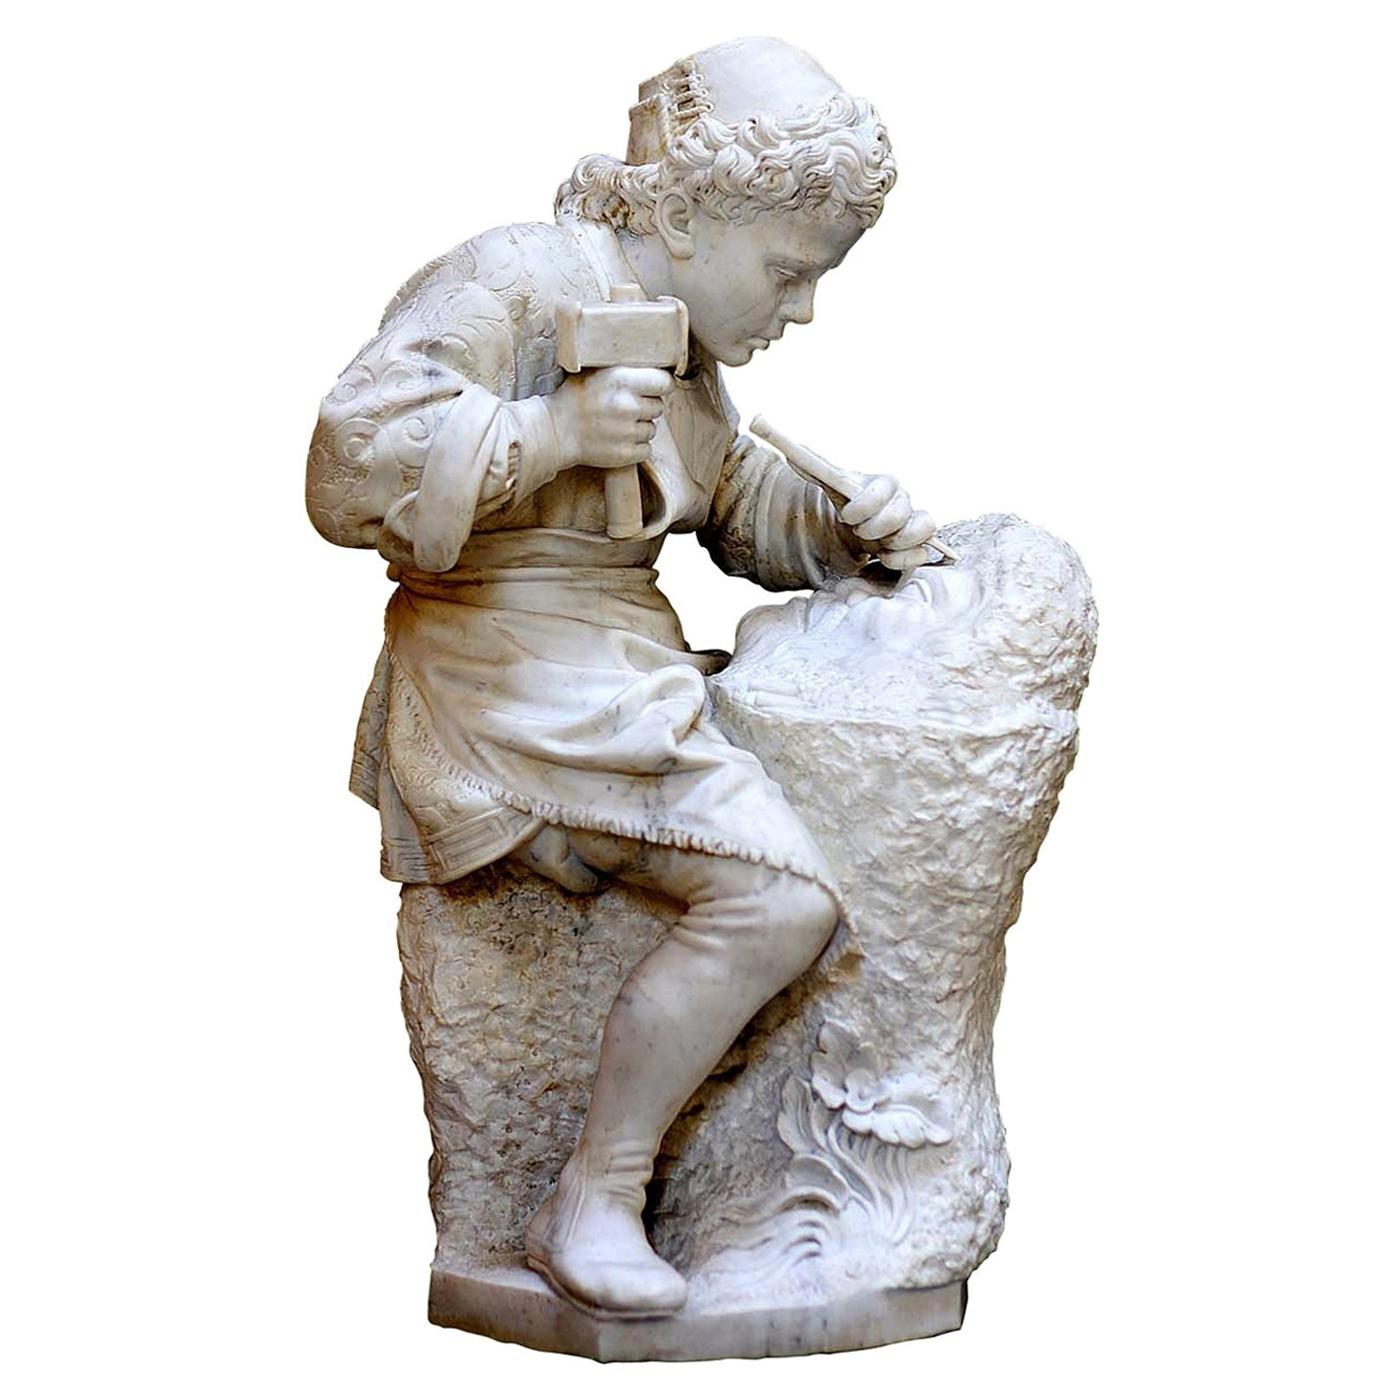 Michelangelo Sculpting the Head of a Fawn Sculpture